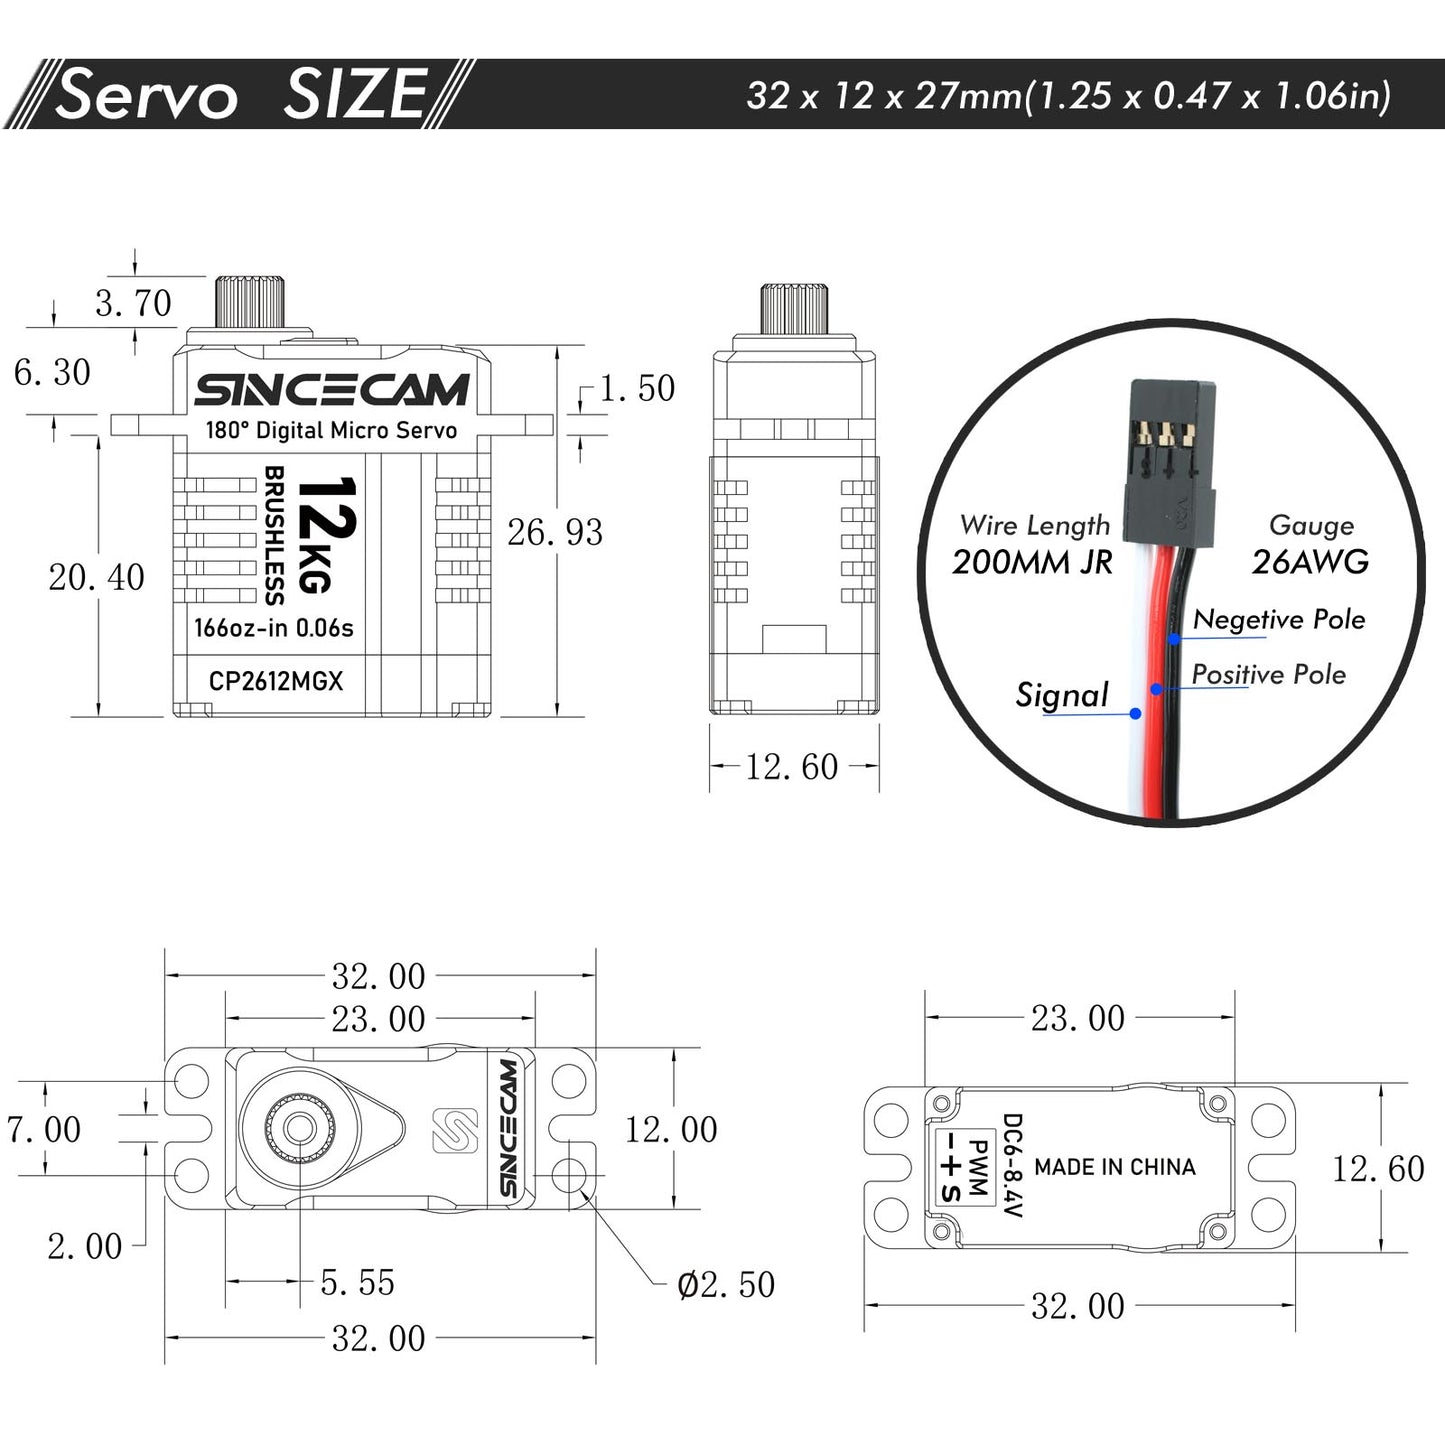 Sincecam 12kg Brush less Micro Servo IP66 Wasserdicht Digital Servos Alle Metall getriebe Aluminium gehäuse Geeignet 1/18 1/24 RC Raupen-Upgrade-Teile (Lila)